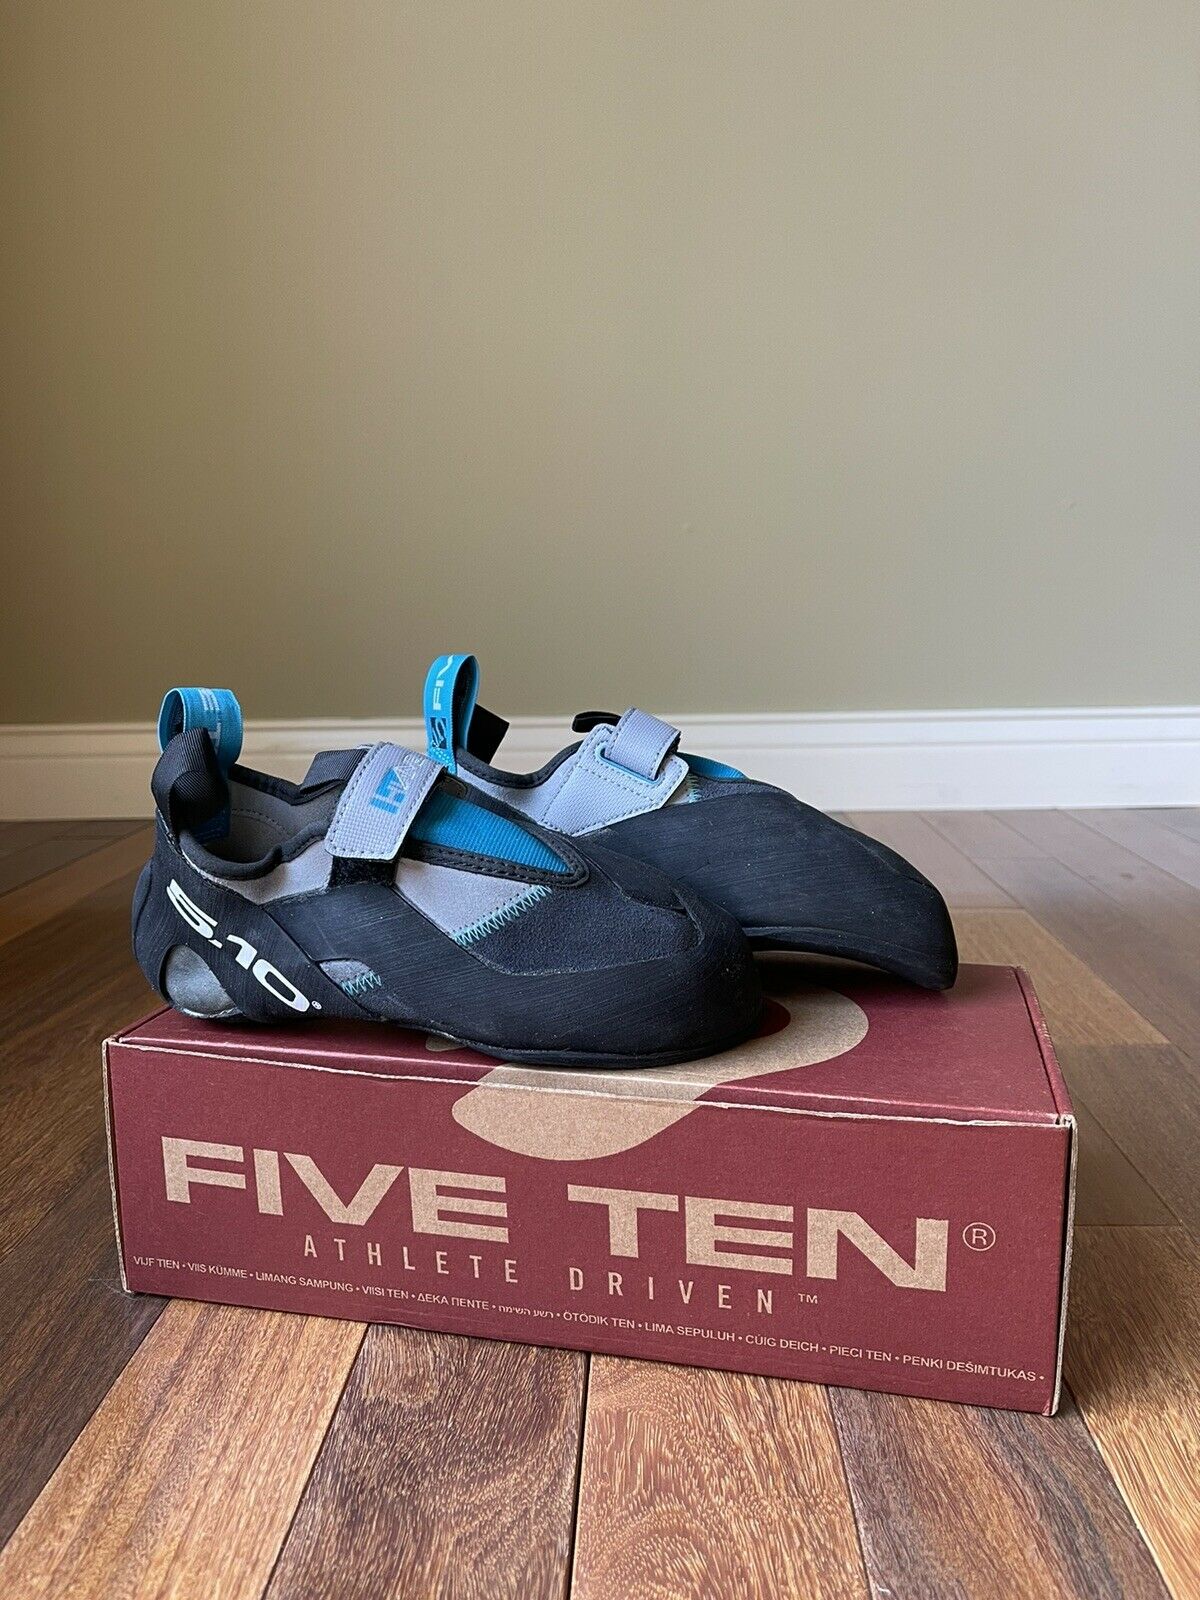 New Men's Five Ten 5.10 by Adidas Hiangle Climbing Shoes Size 7